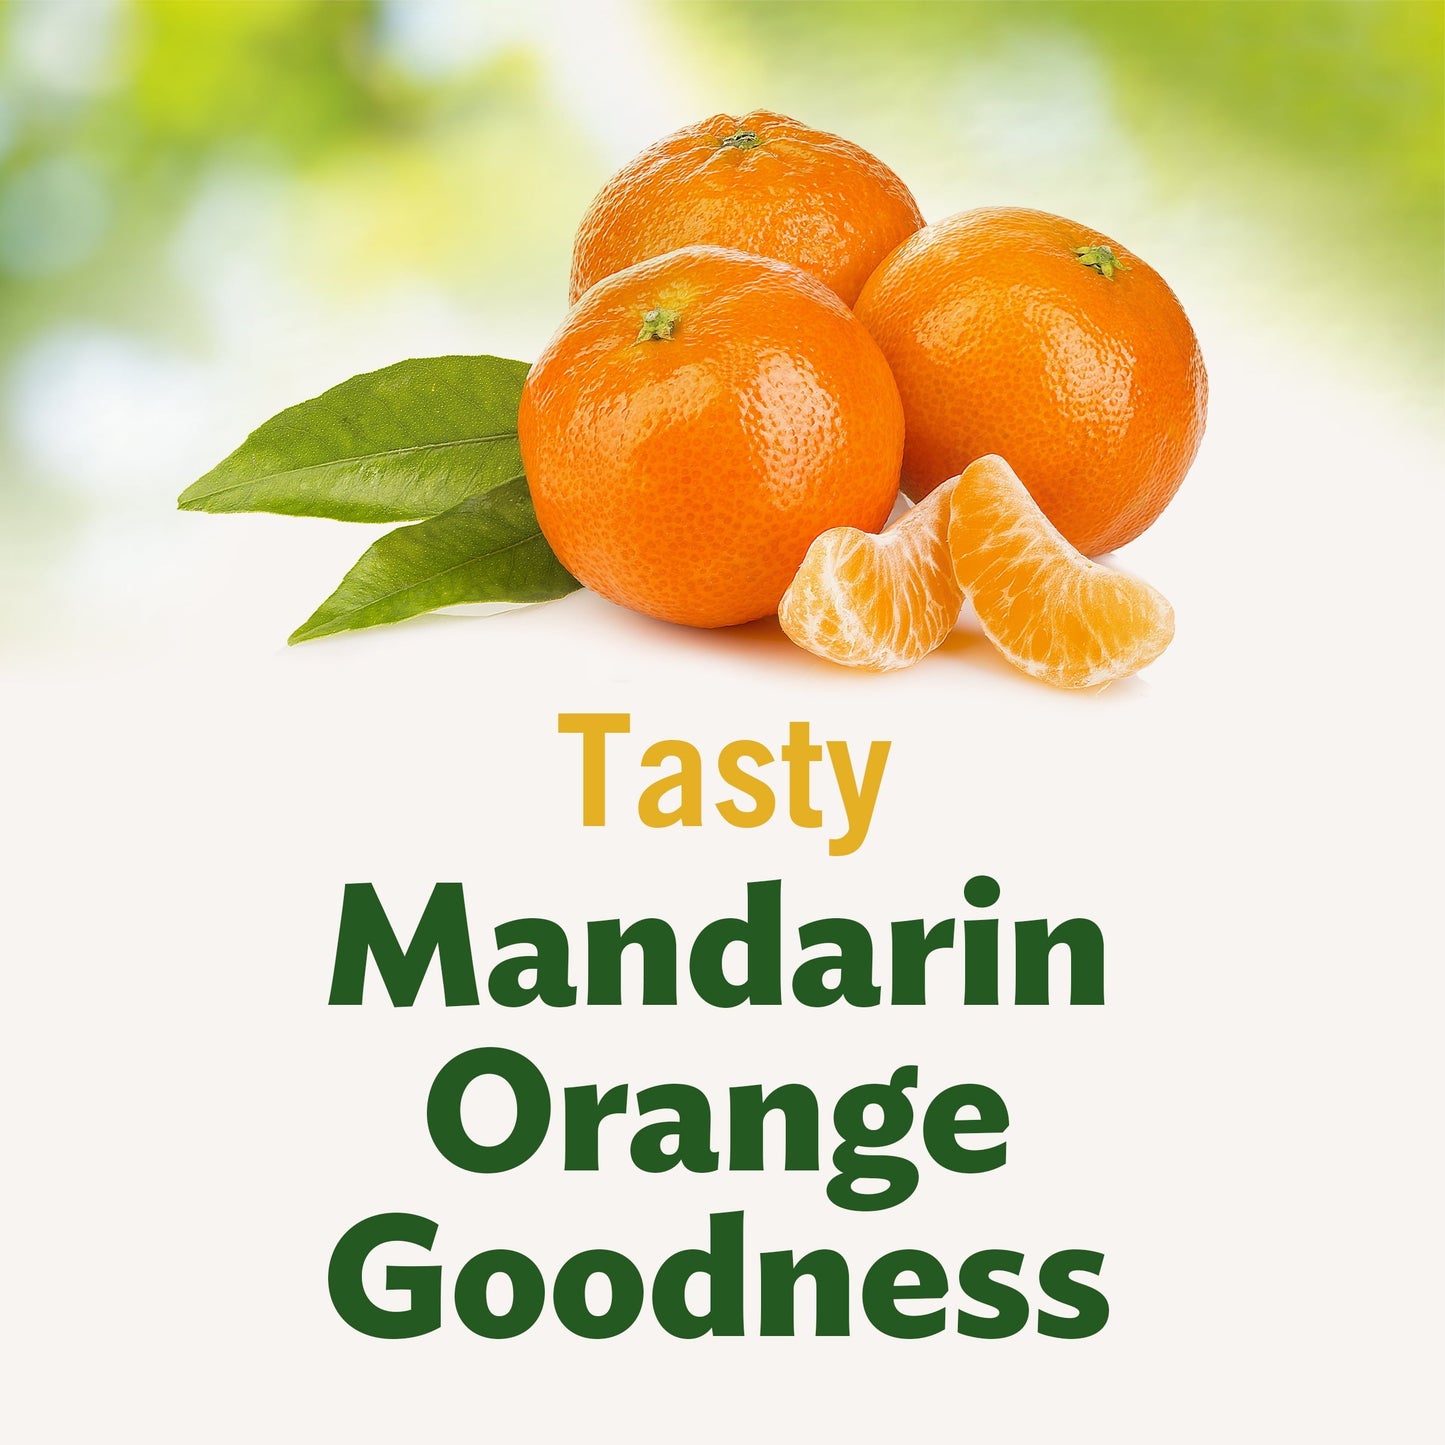 (12 Cups) Del Monte Mandarin Oranges Fruit Cups, No Sugar Added, 4 oz